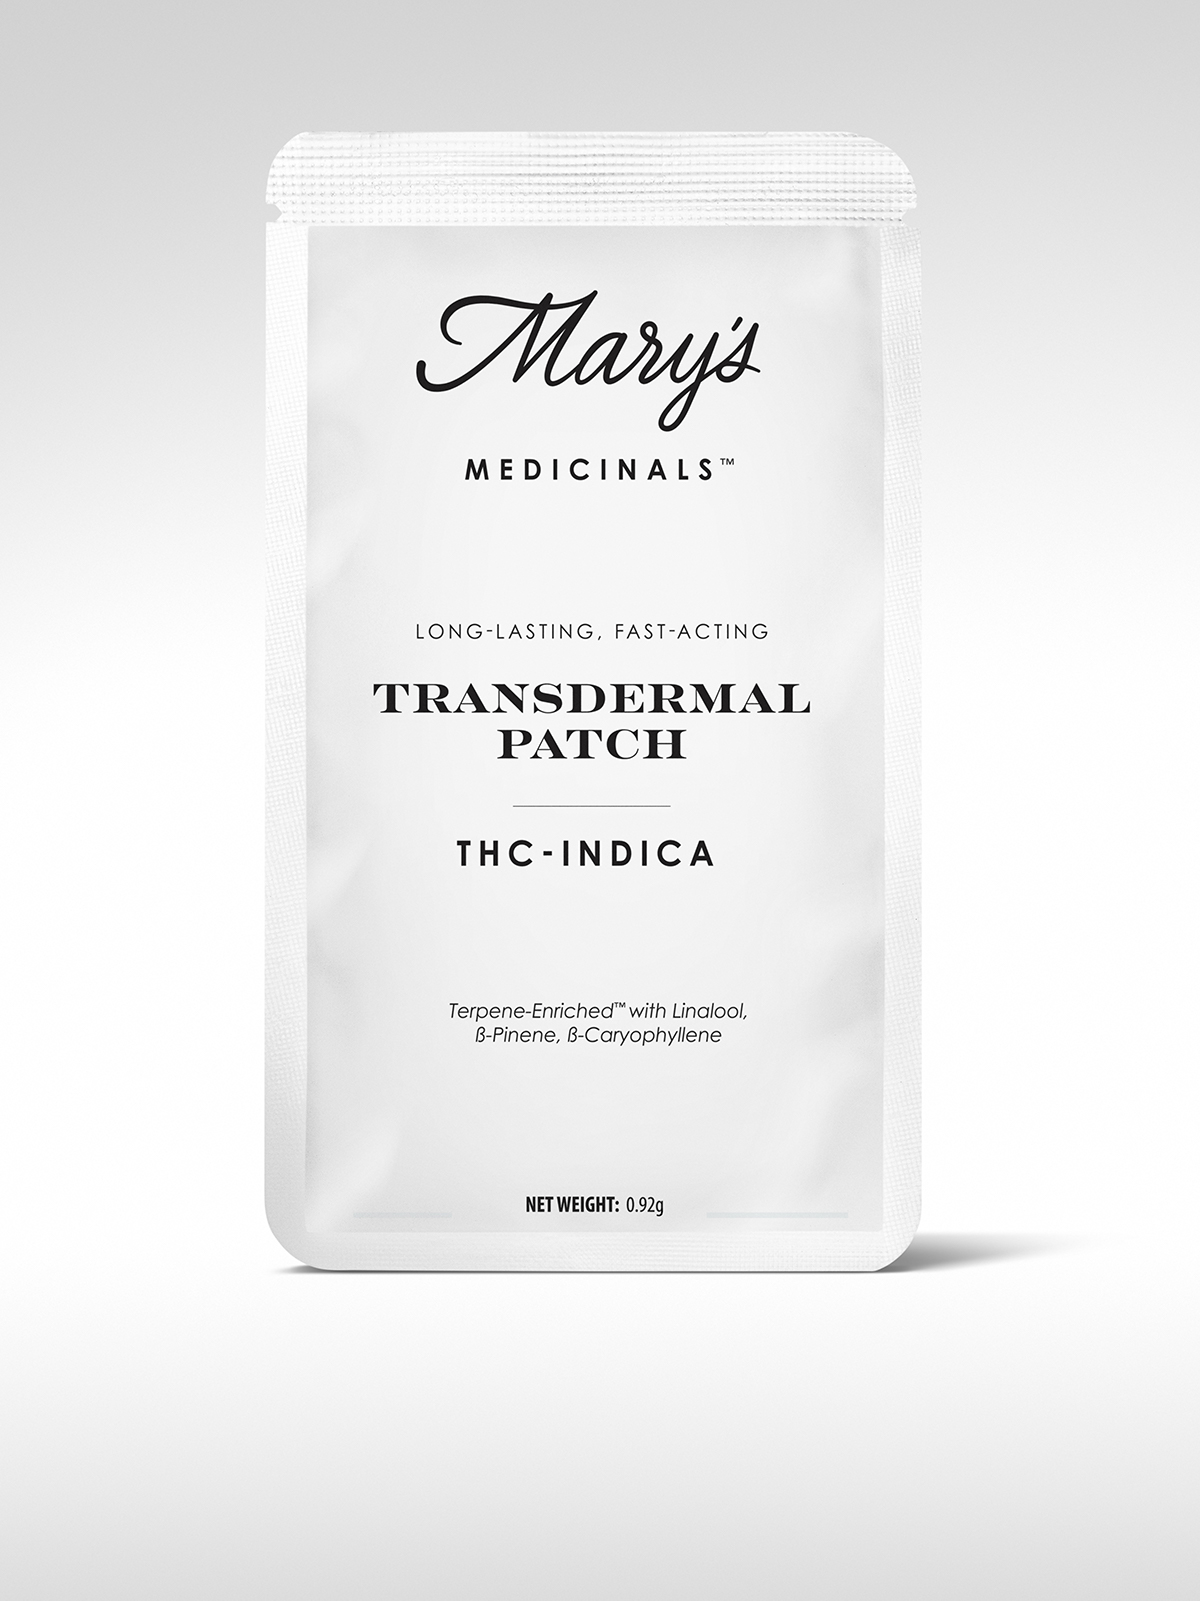 Mary’s Medicinals transdermal patch